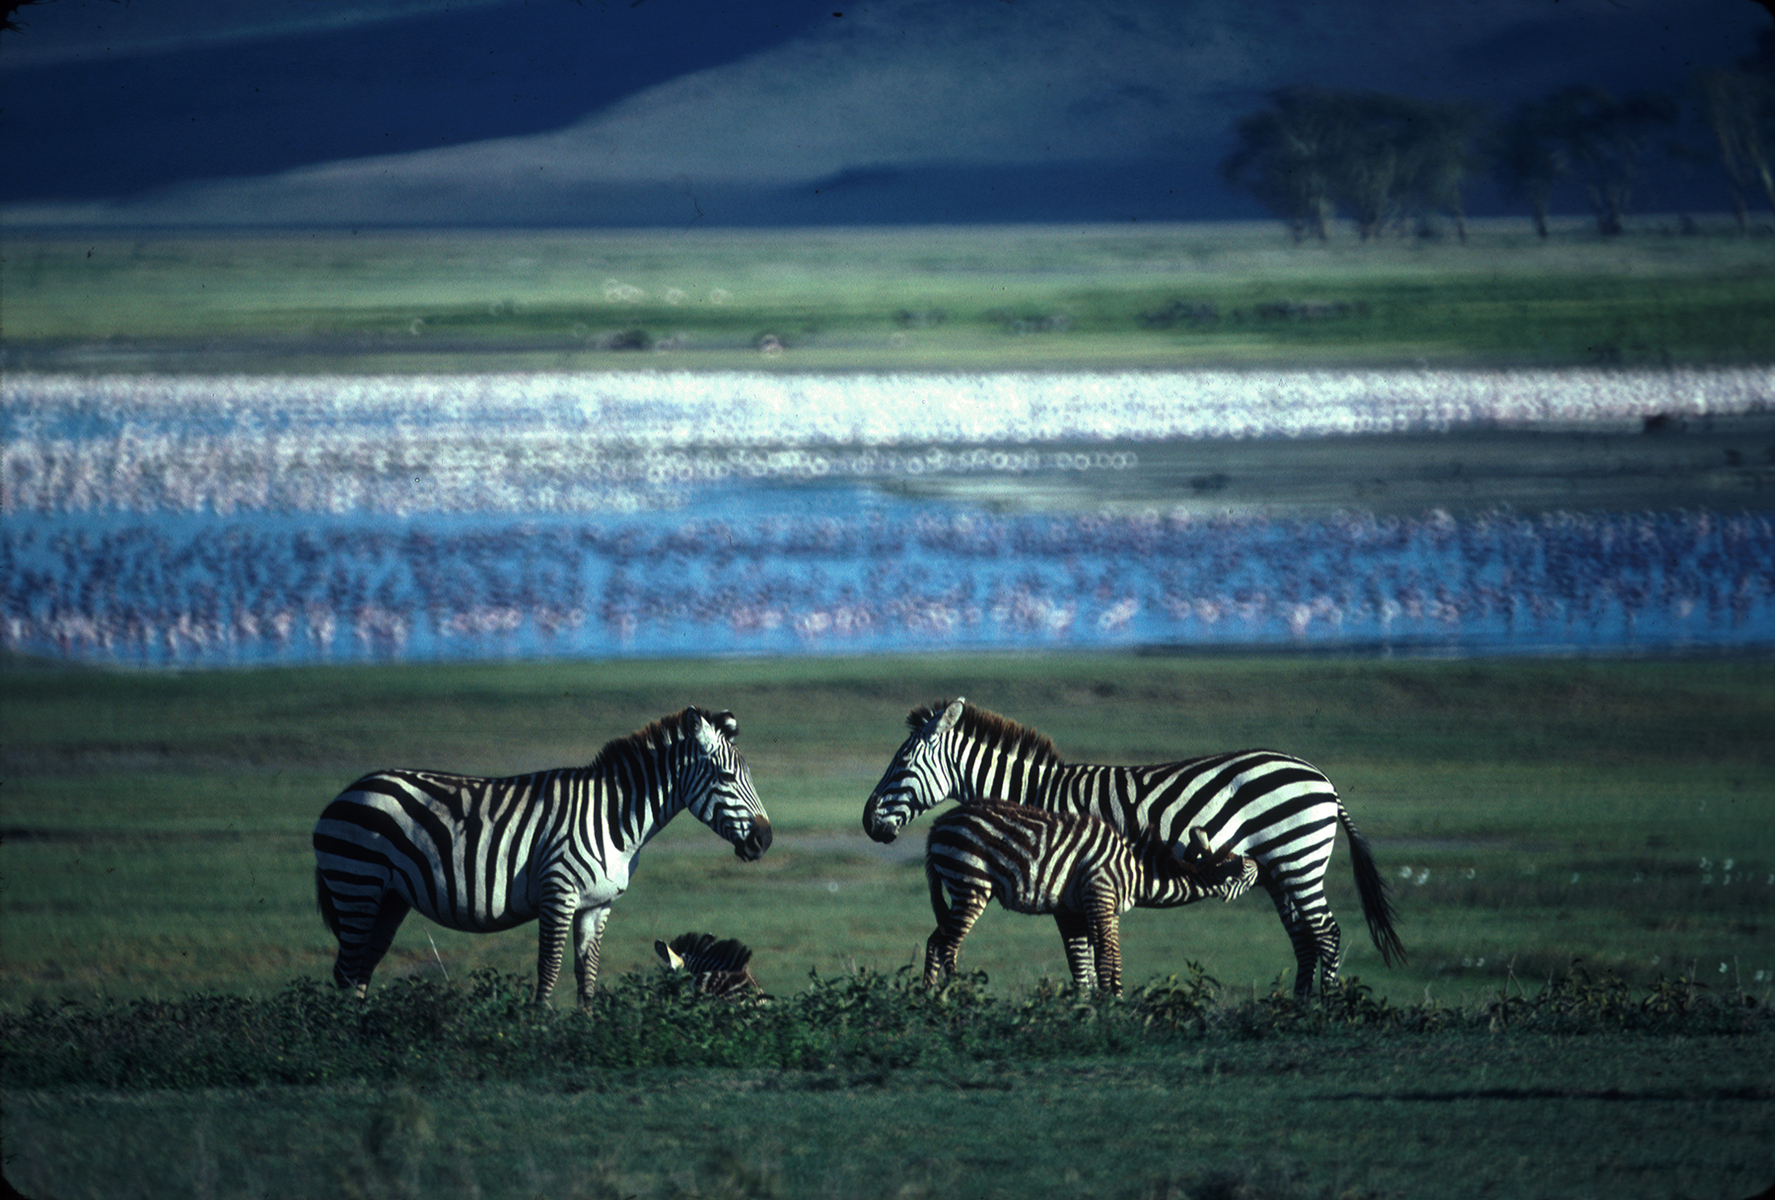 Ngorongoro Crater, Tanzania